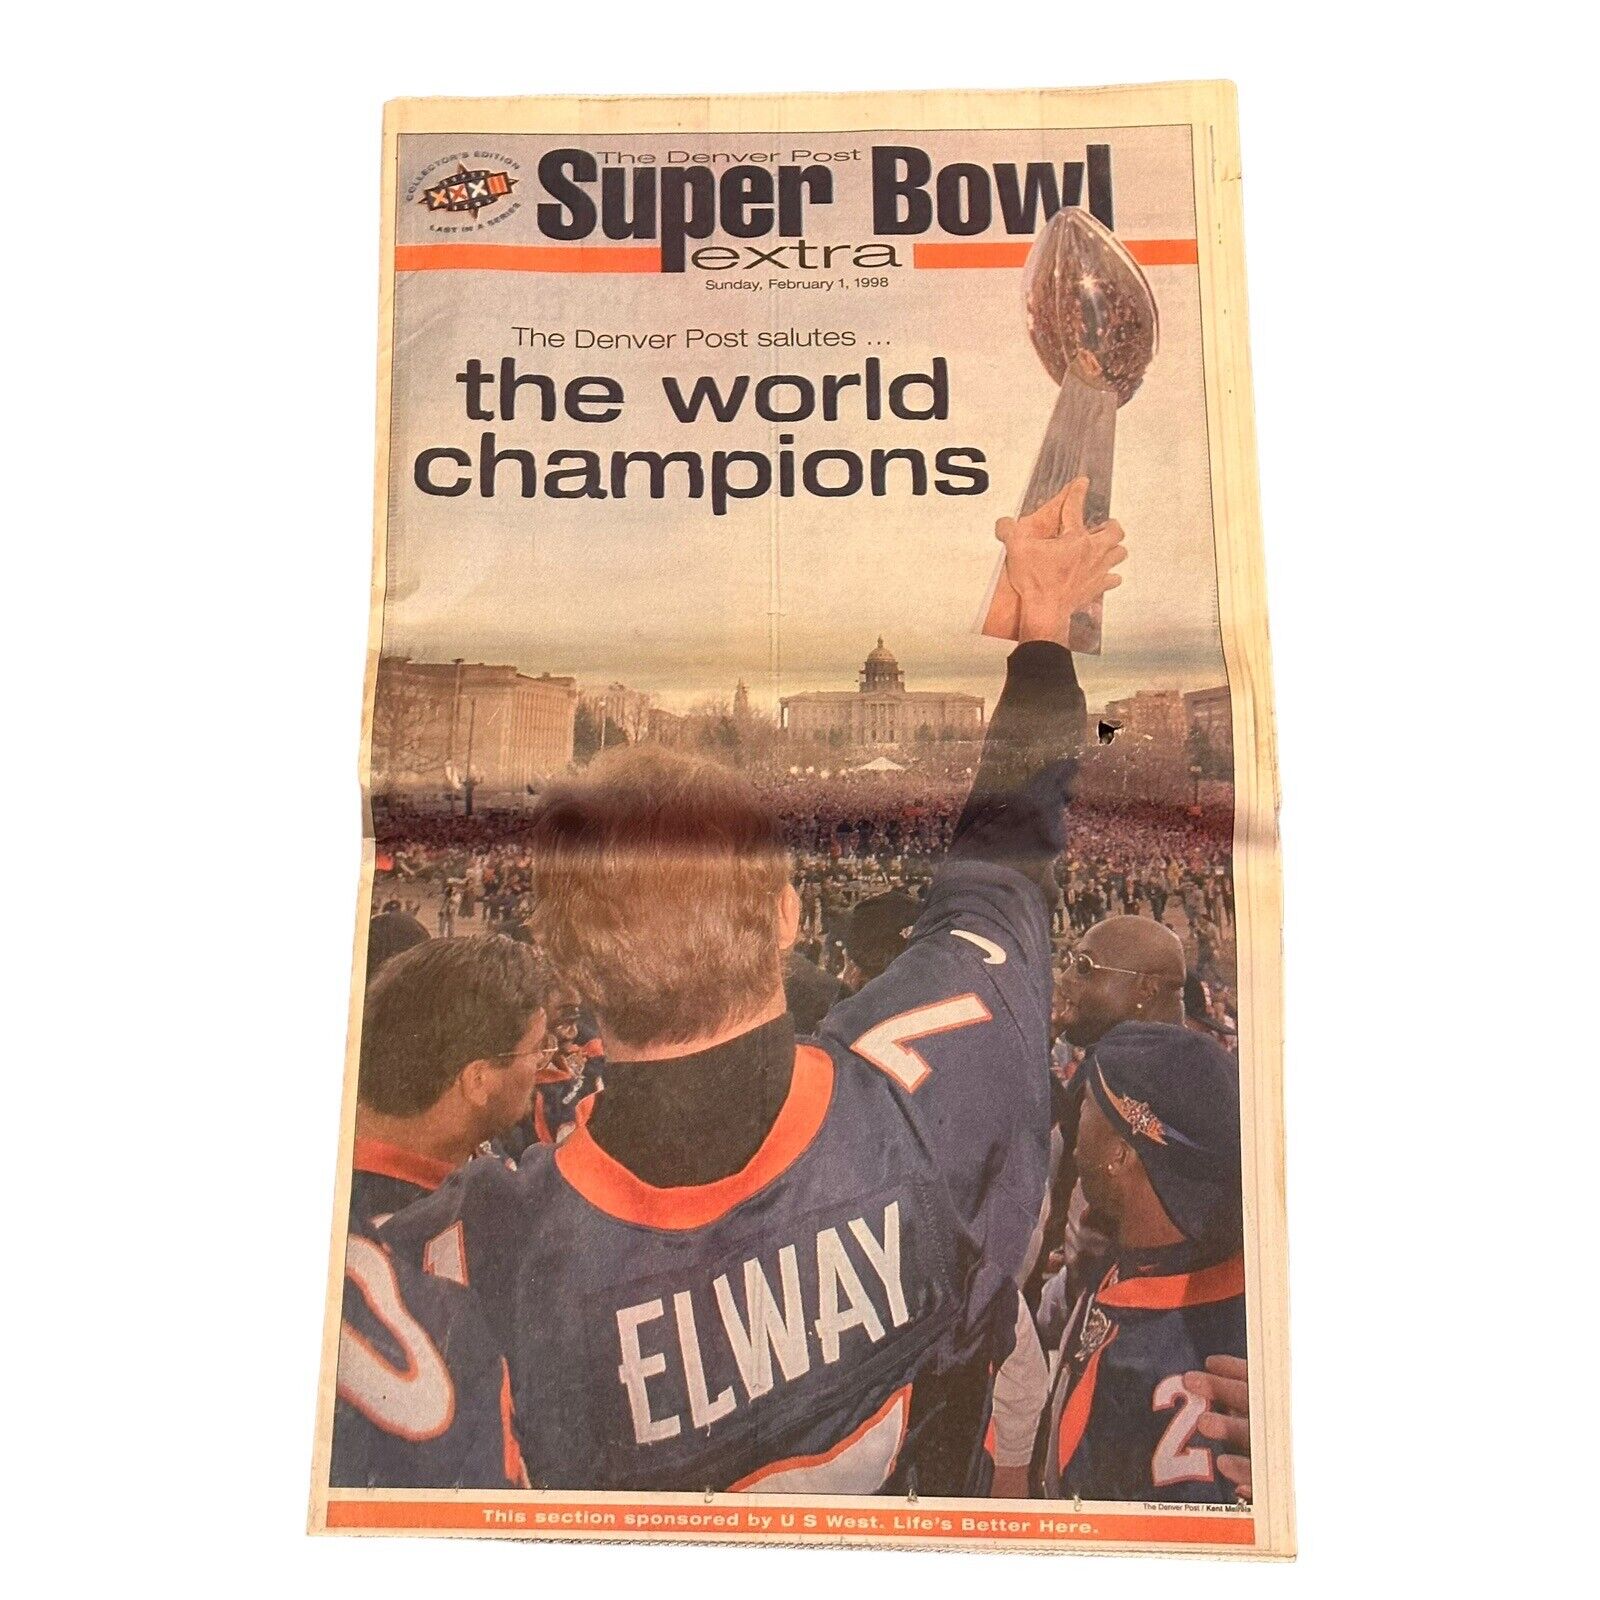 Denver Bronco Super Bowl newspaper Post SUPER BOWL XXXII Extra 3 Sections